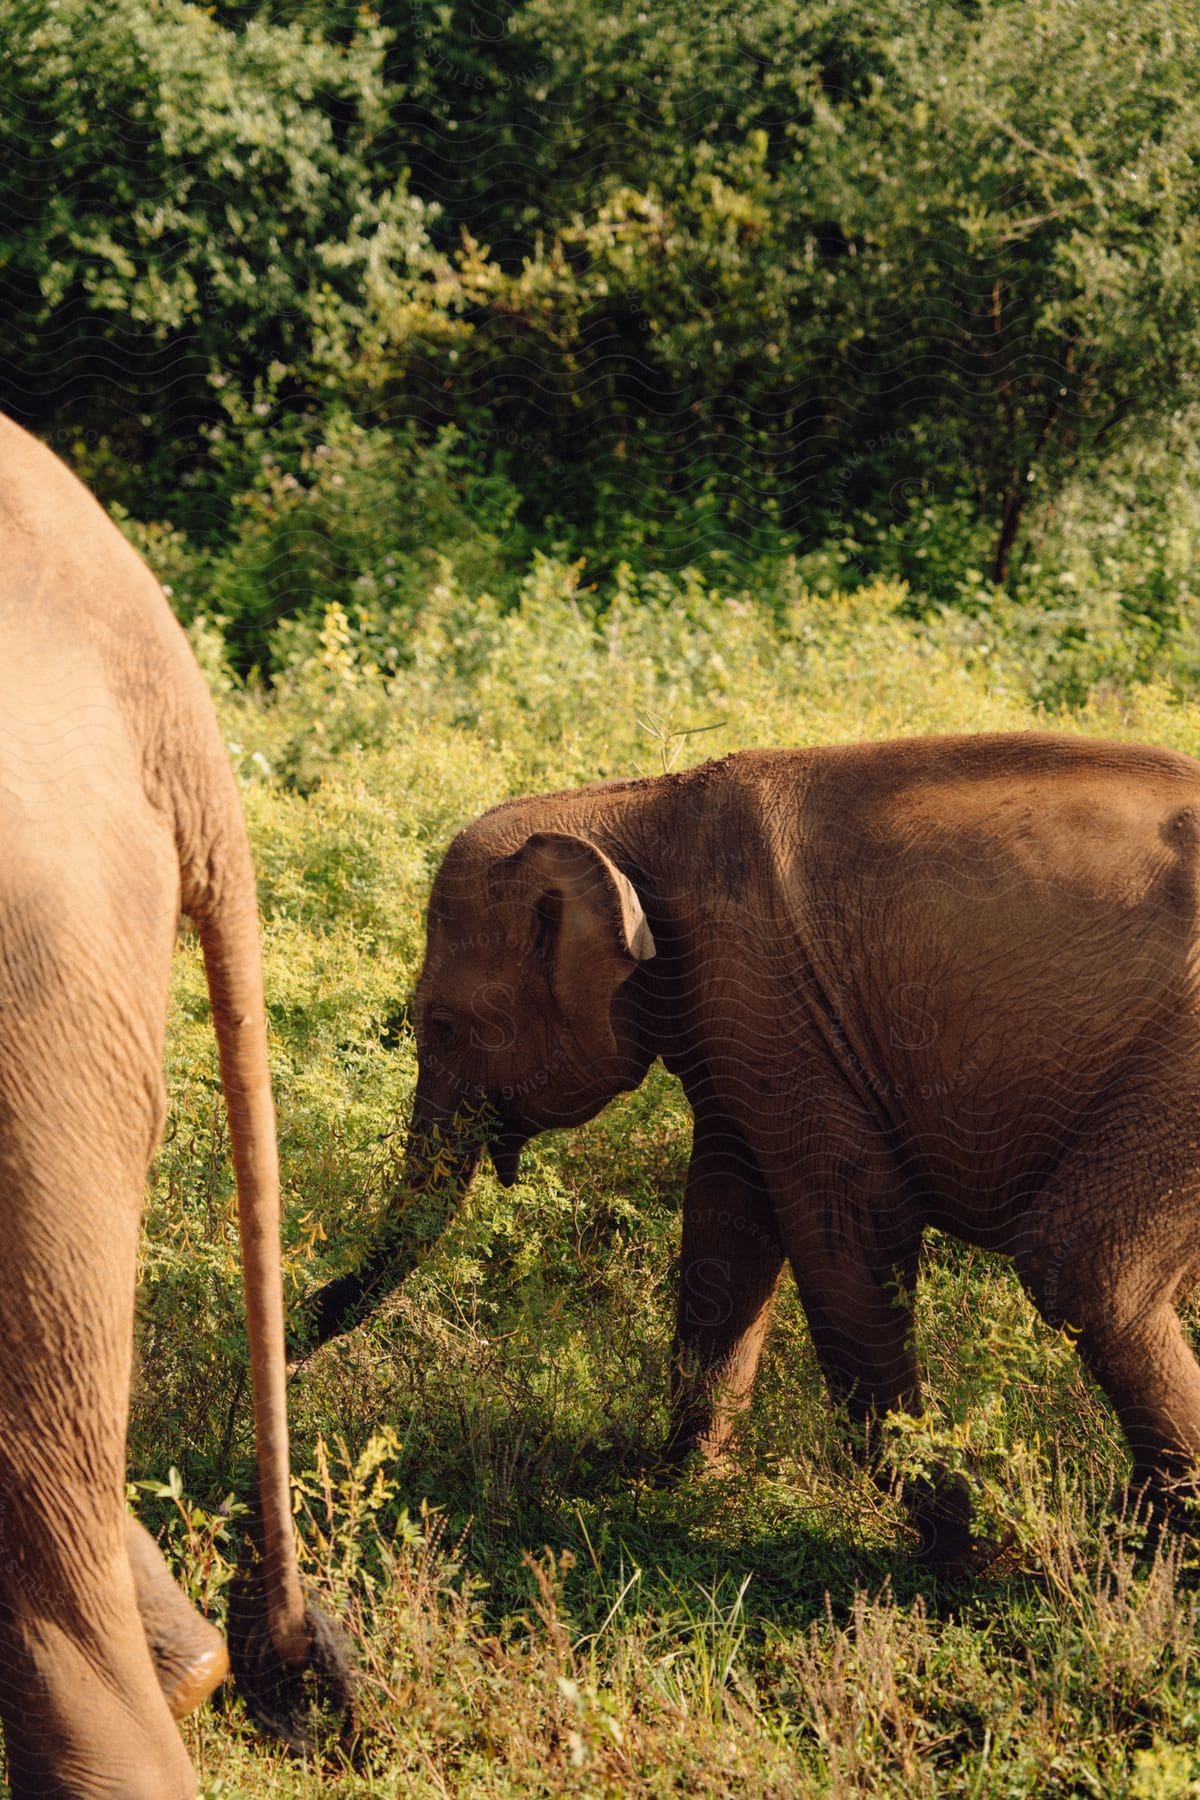 Young elephant walking alongside an adult elephant in a savannah environment.